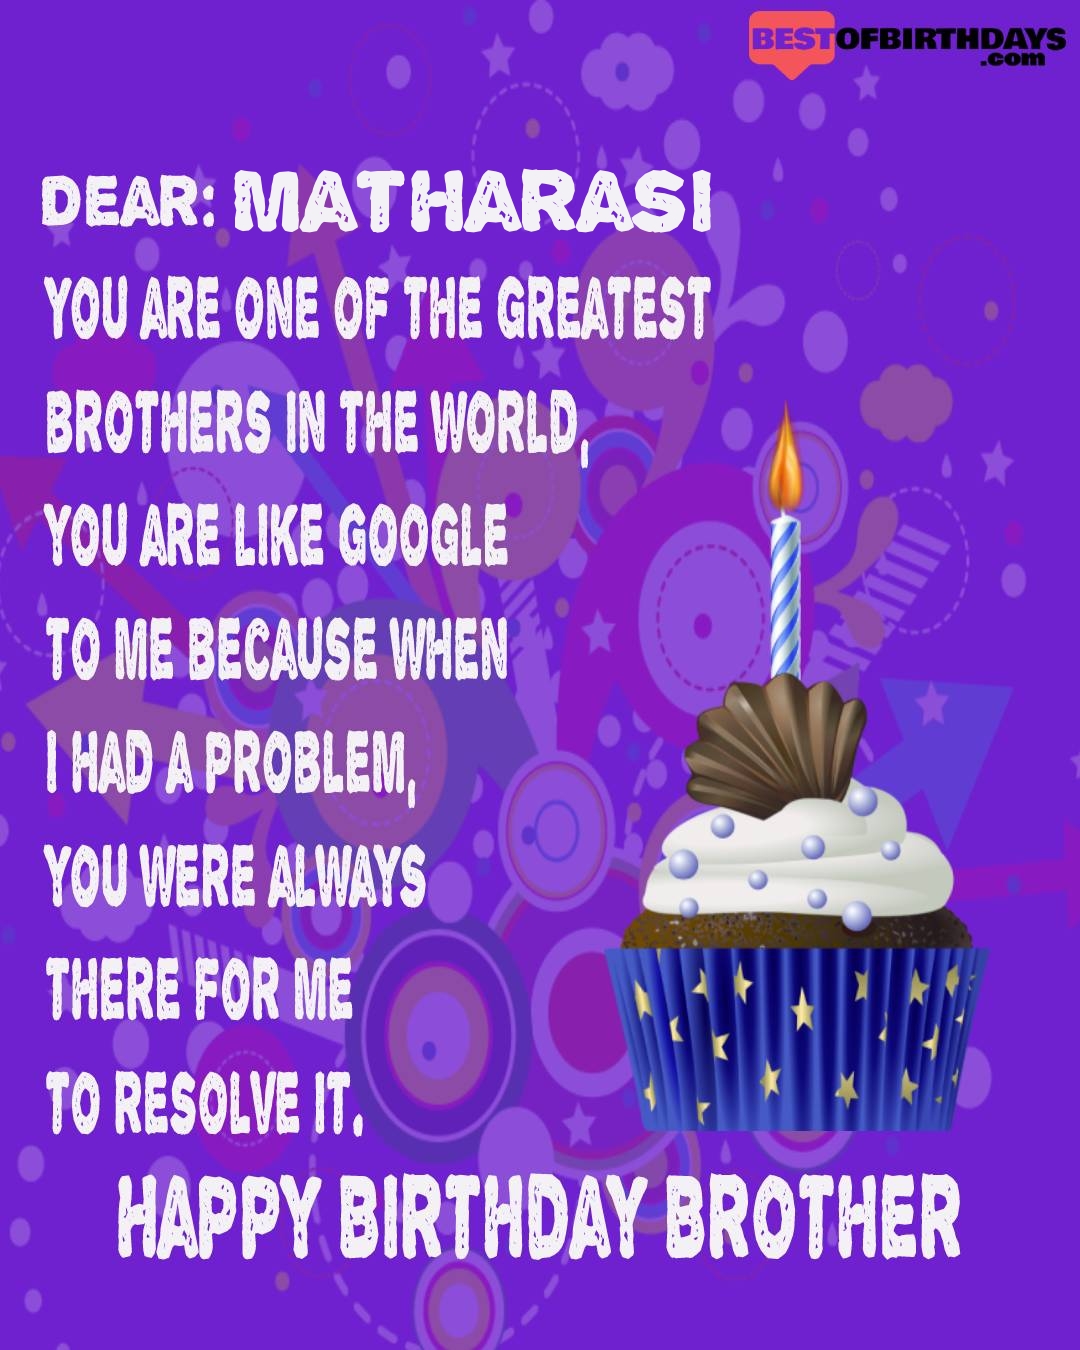 Happy birthday matharasi bhai brother bro